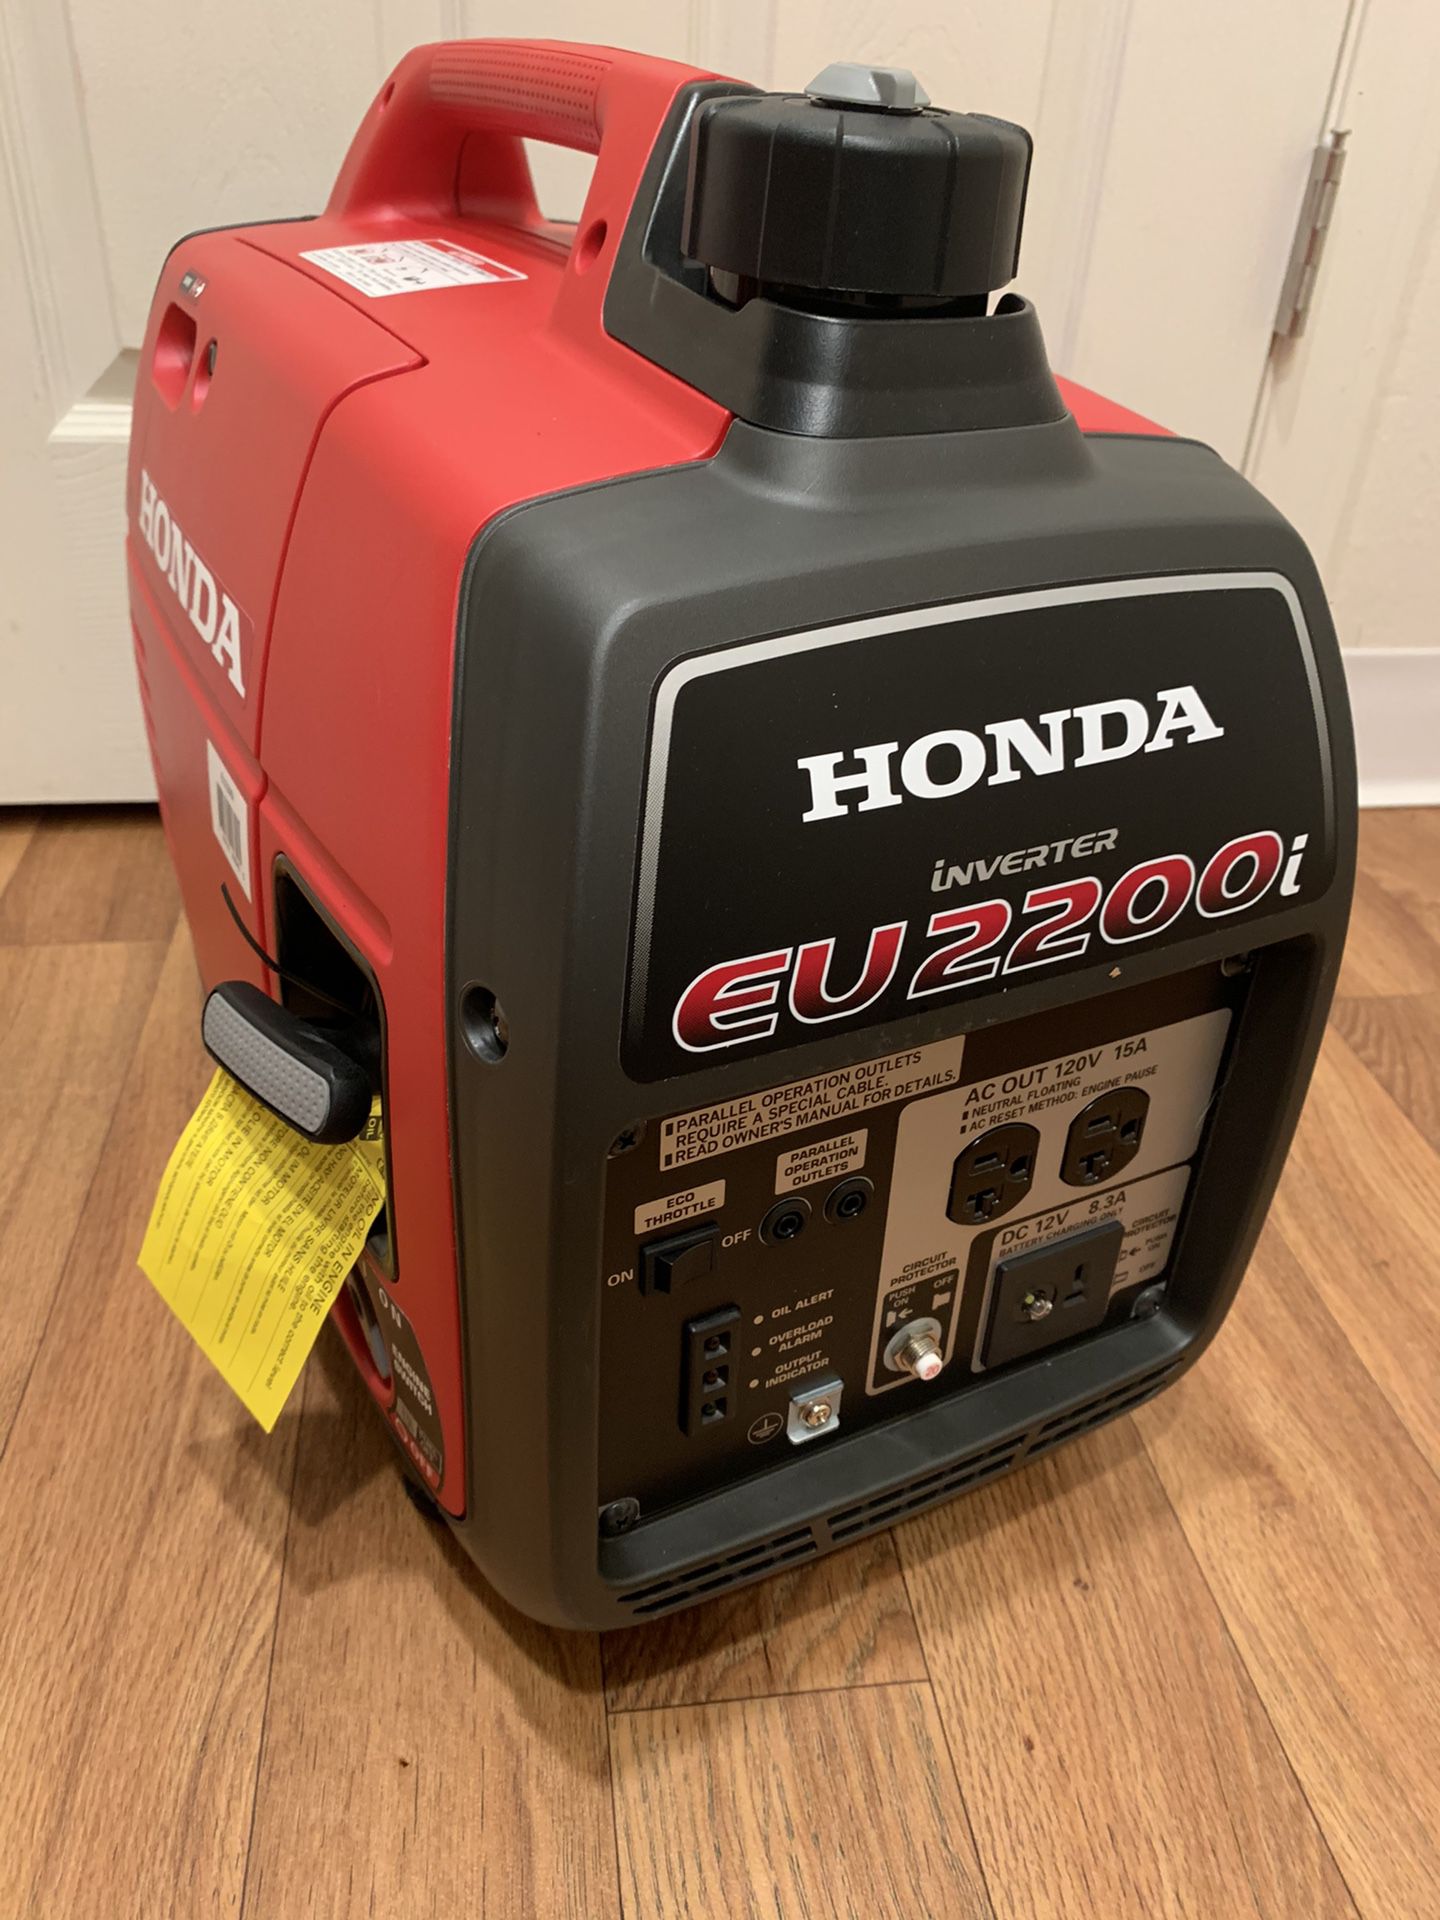 Honda generator EU2200i. $850 firm on price